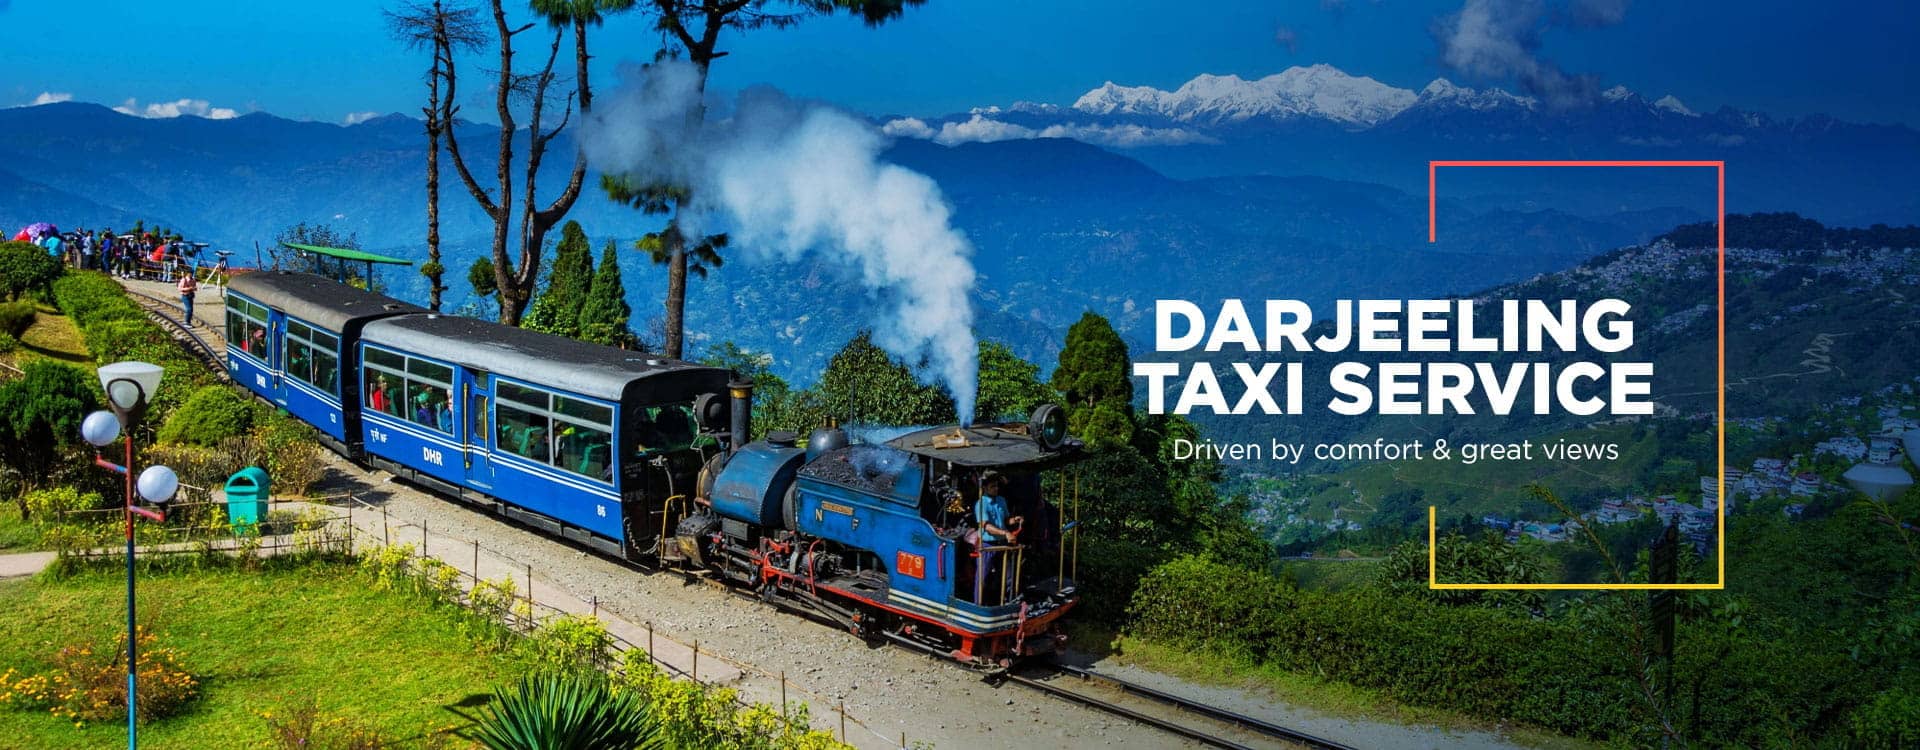 Darjeeling Taxi Service